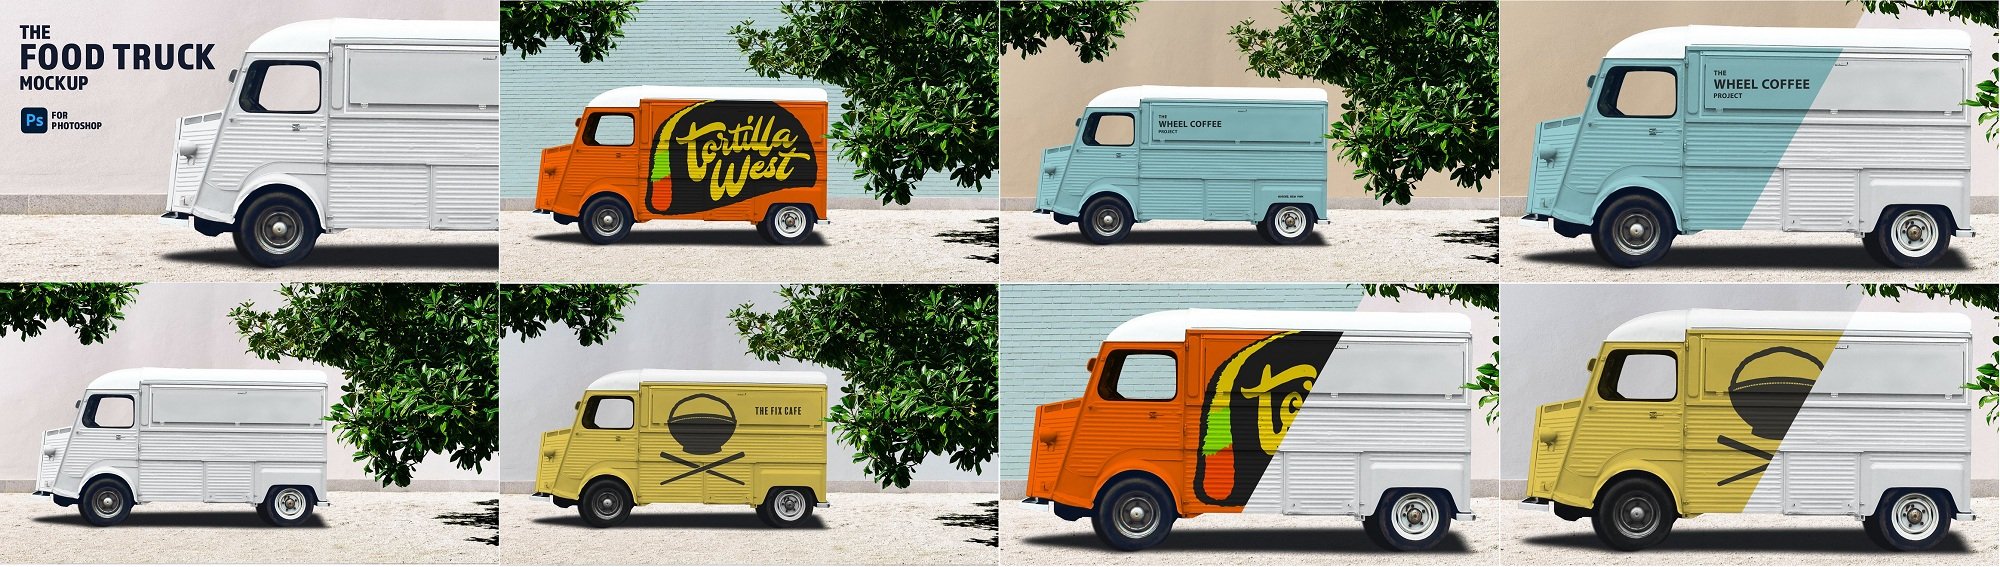 Download CreativeMarket - Food Truck Branding Mockup 5735423 - SoftArchive